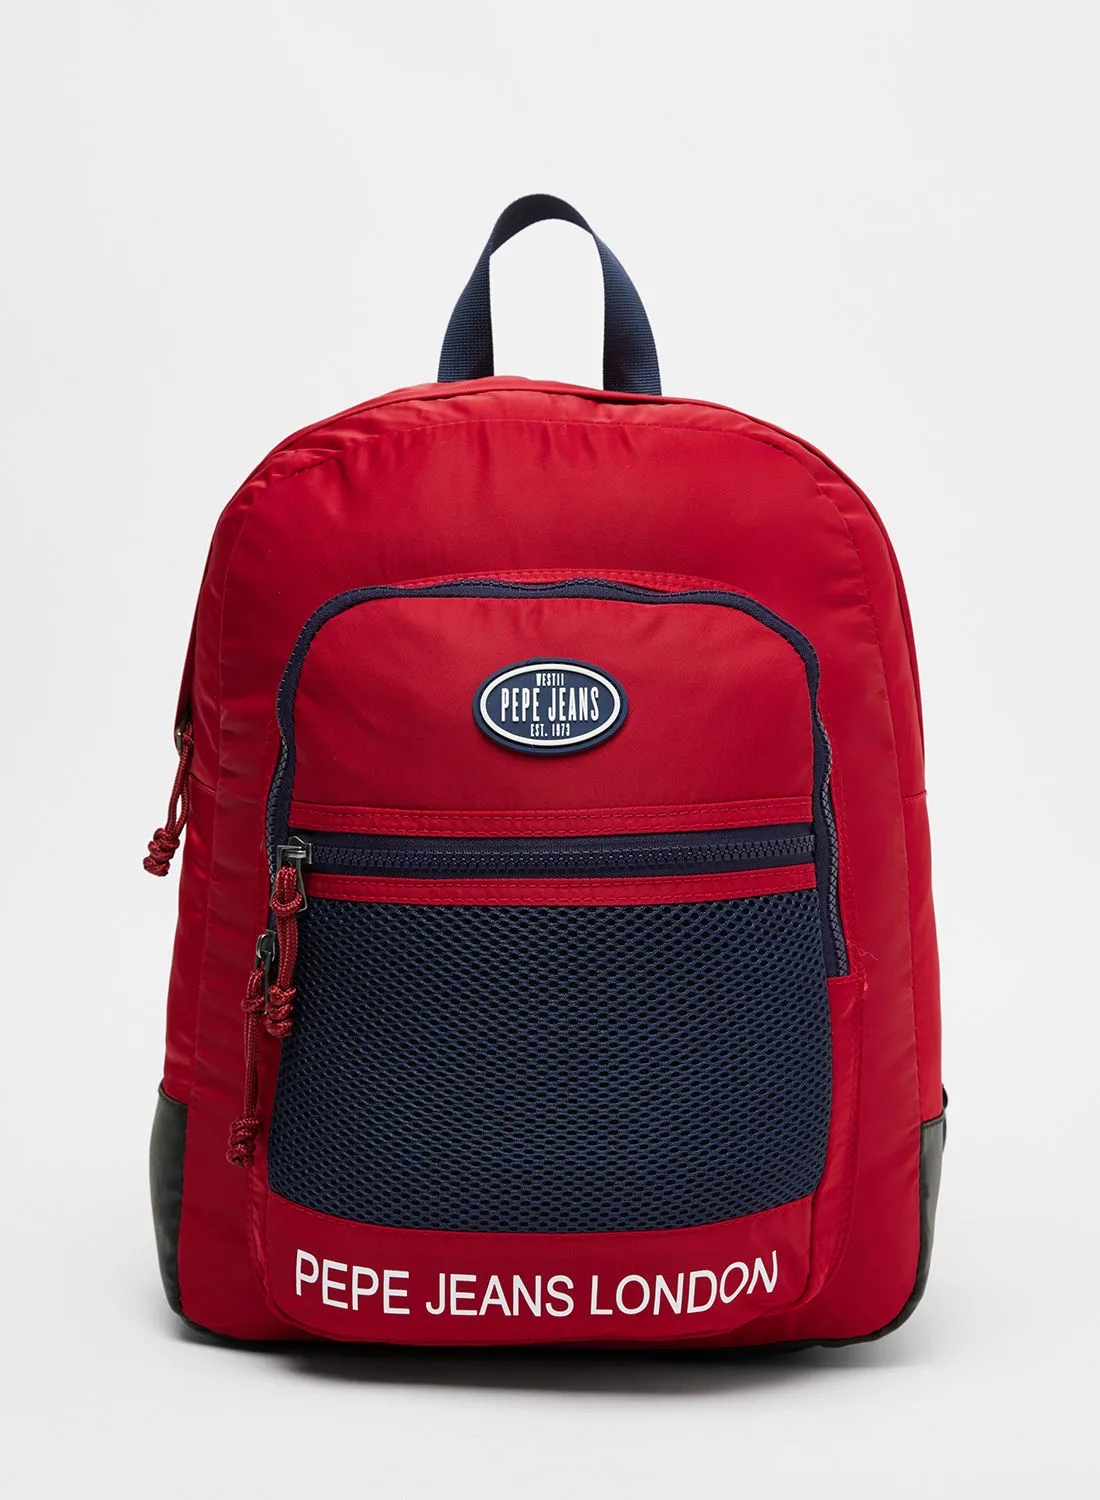 Pepe Jeans لندن حقيبة ظهر دارين مزدوجة الجيب باللون الأحمر